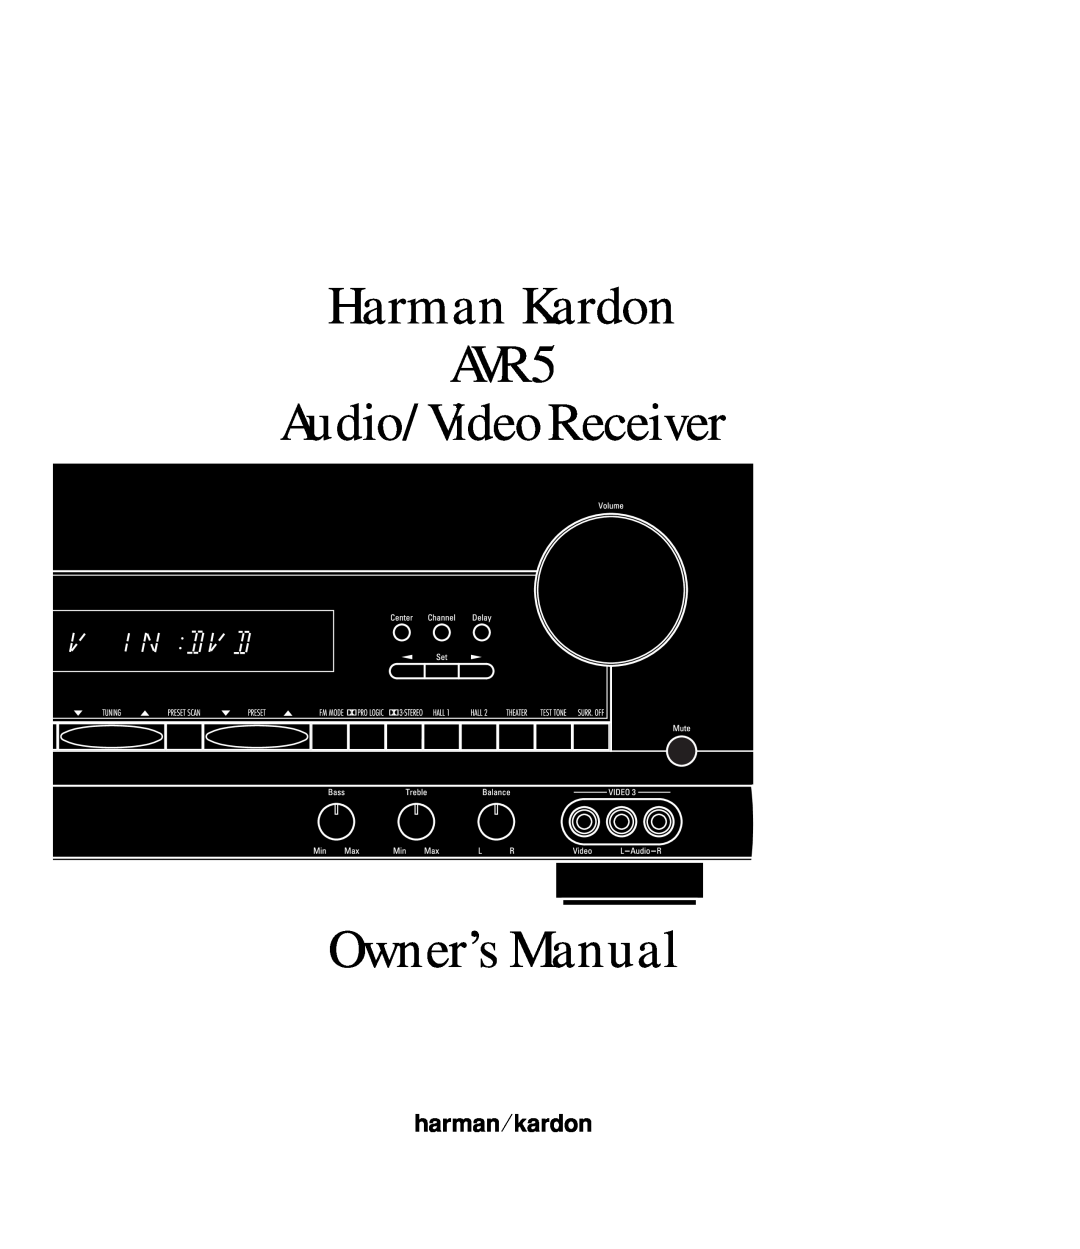 Harman-Kardon owner manual Harman Kardon AVR5 Audio/VideoReceiver 